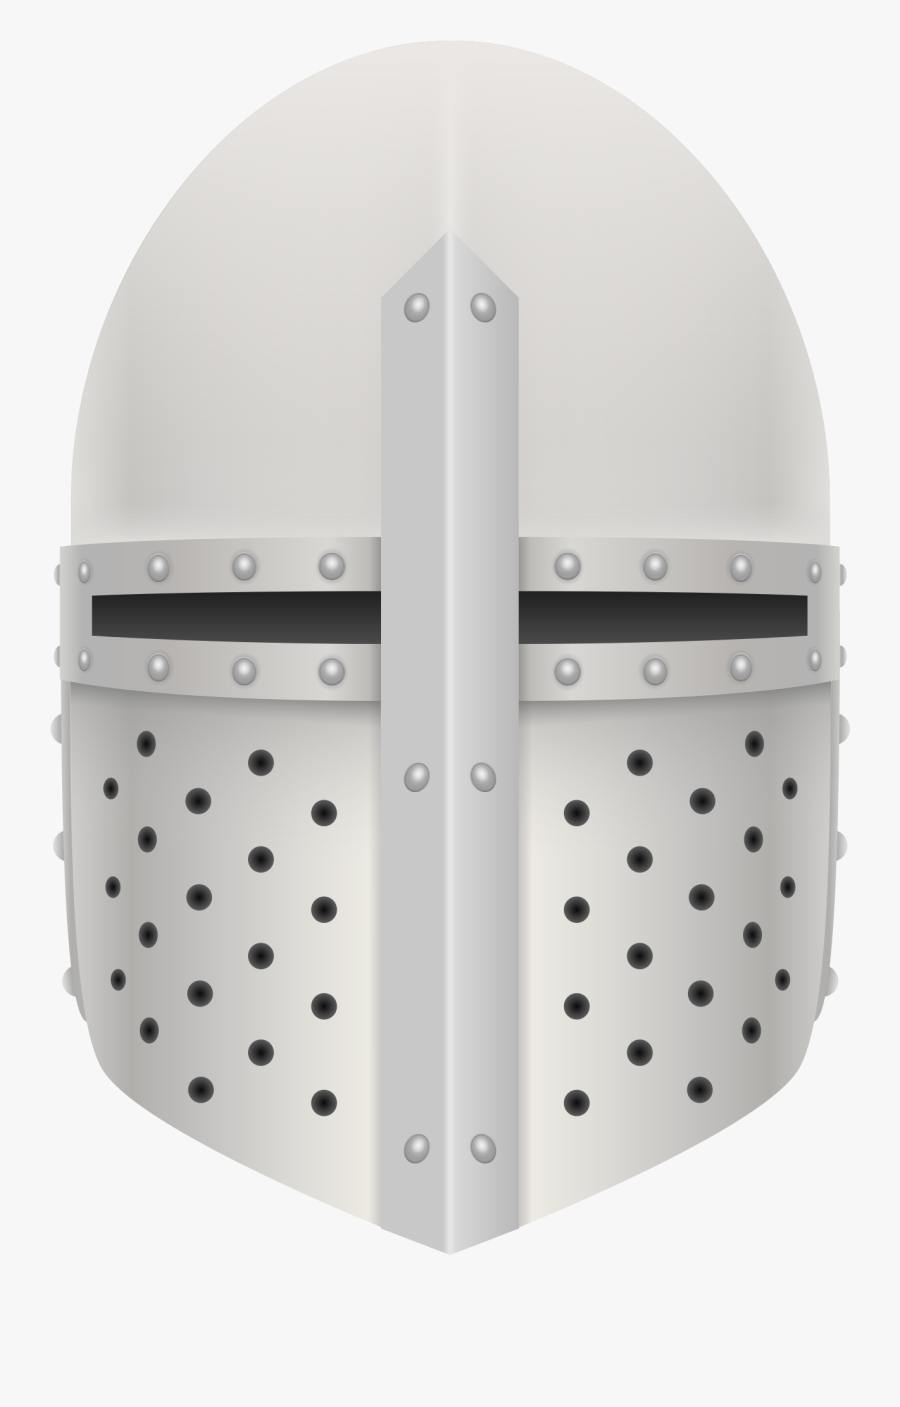 Medieval Helmet Vector Png Transparent Image - Transparency, Transparent Clipart